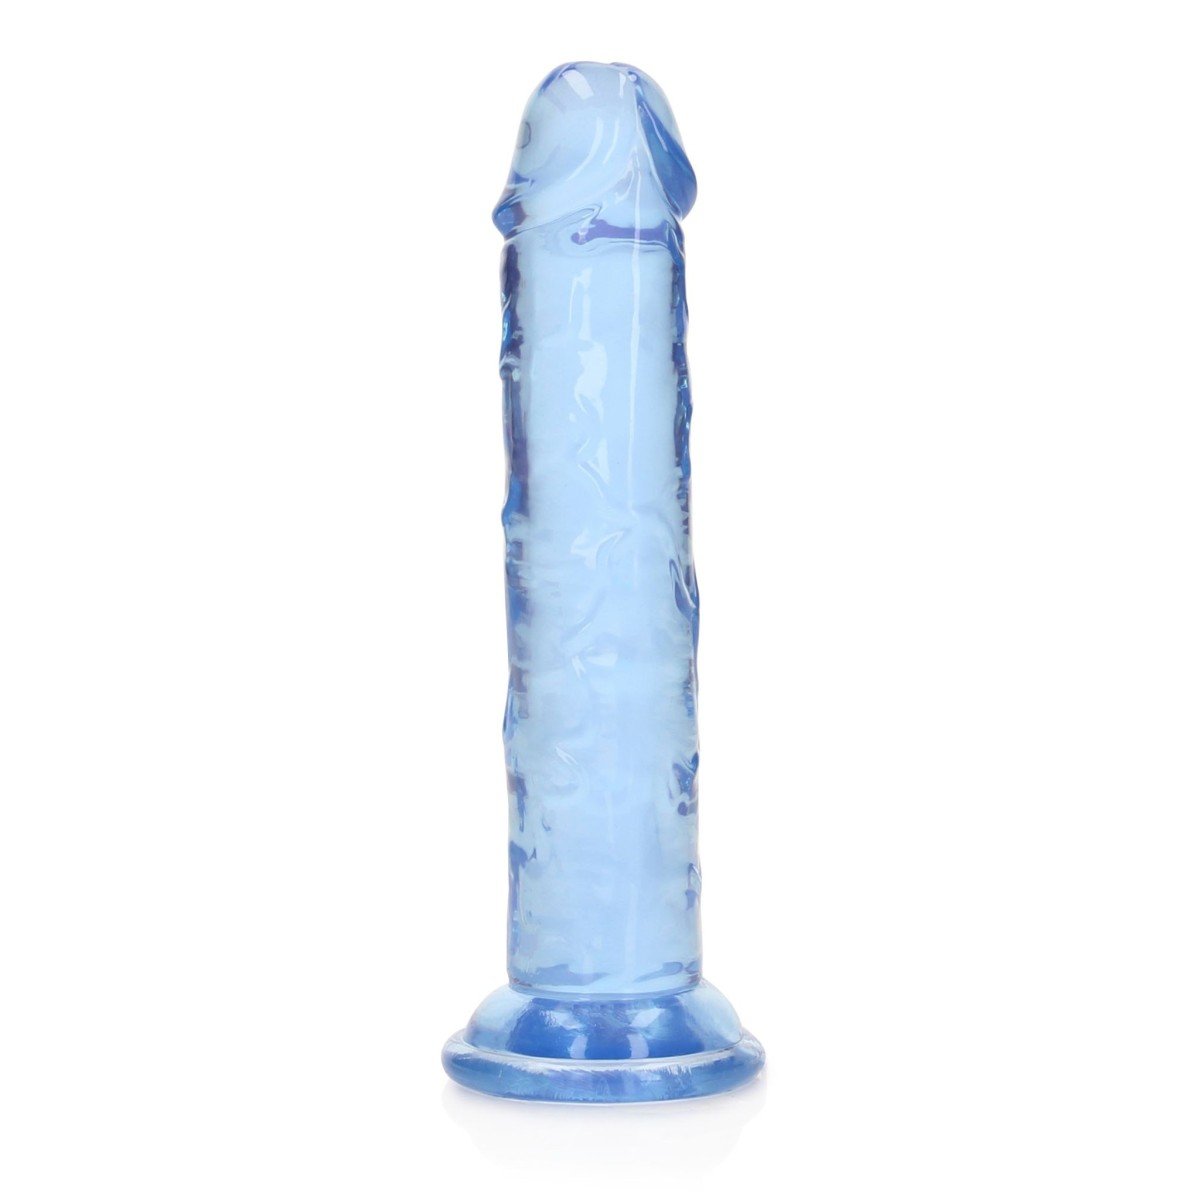 Gelové dildo RealRock Crystal Clear Realistic 6″ modré, dildo s přísavkou 15,5 x 2,8 cm